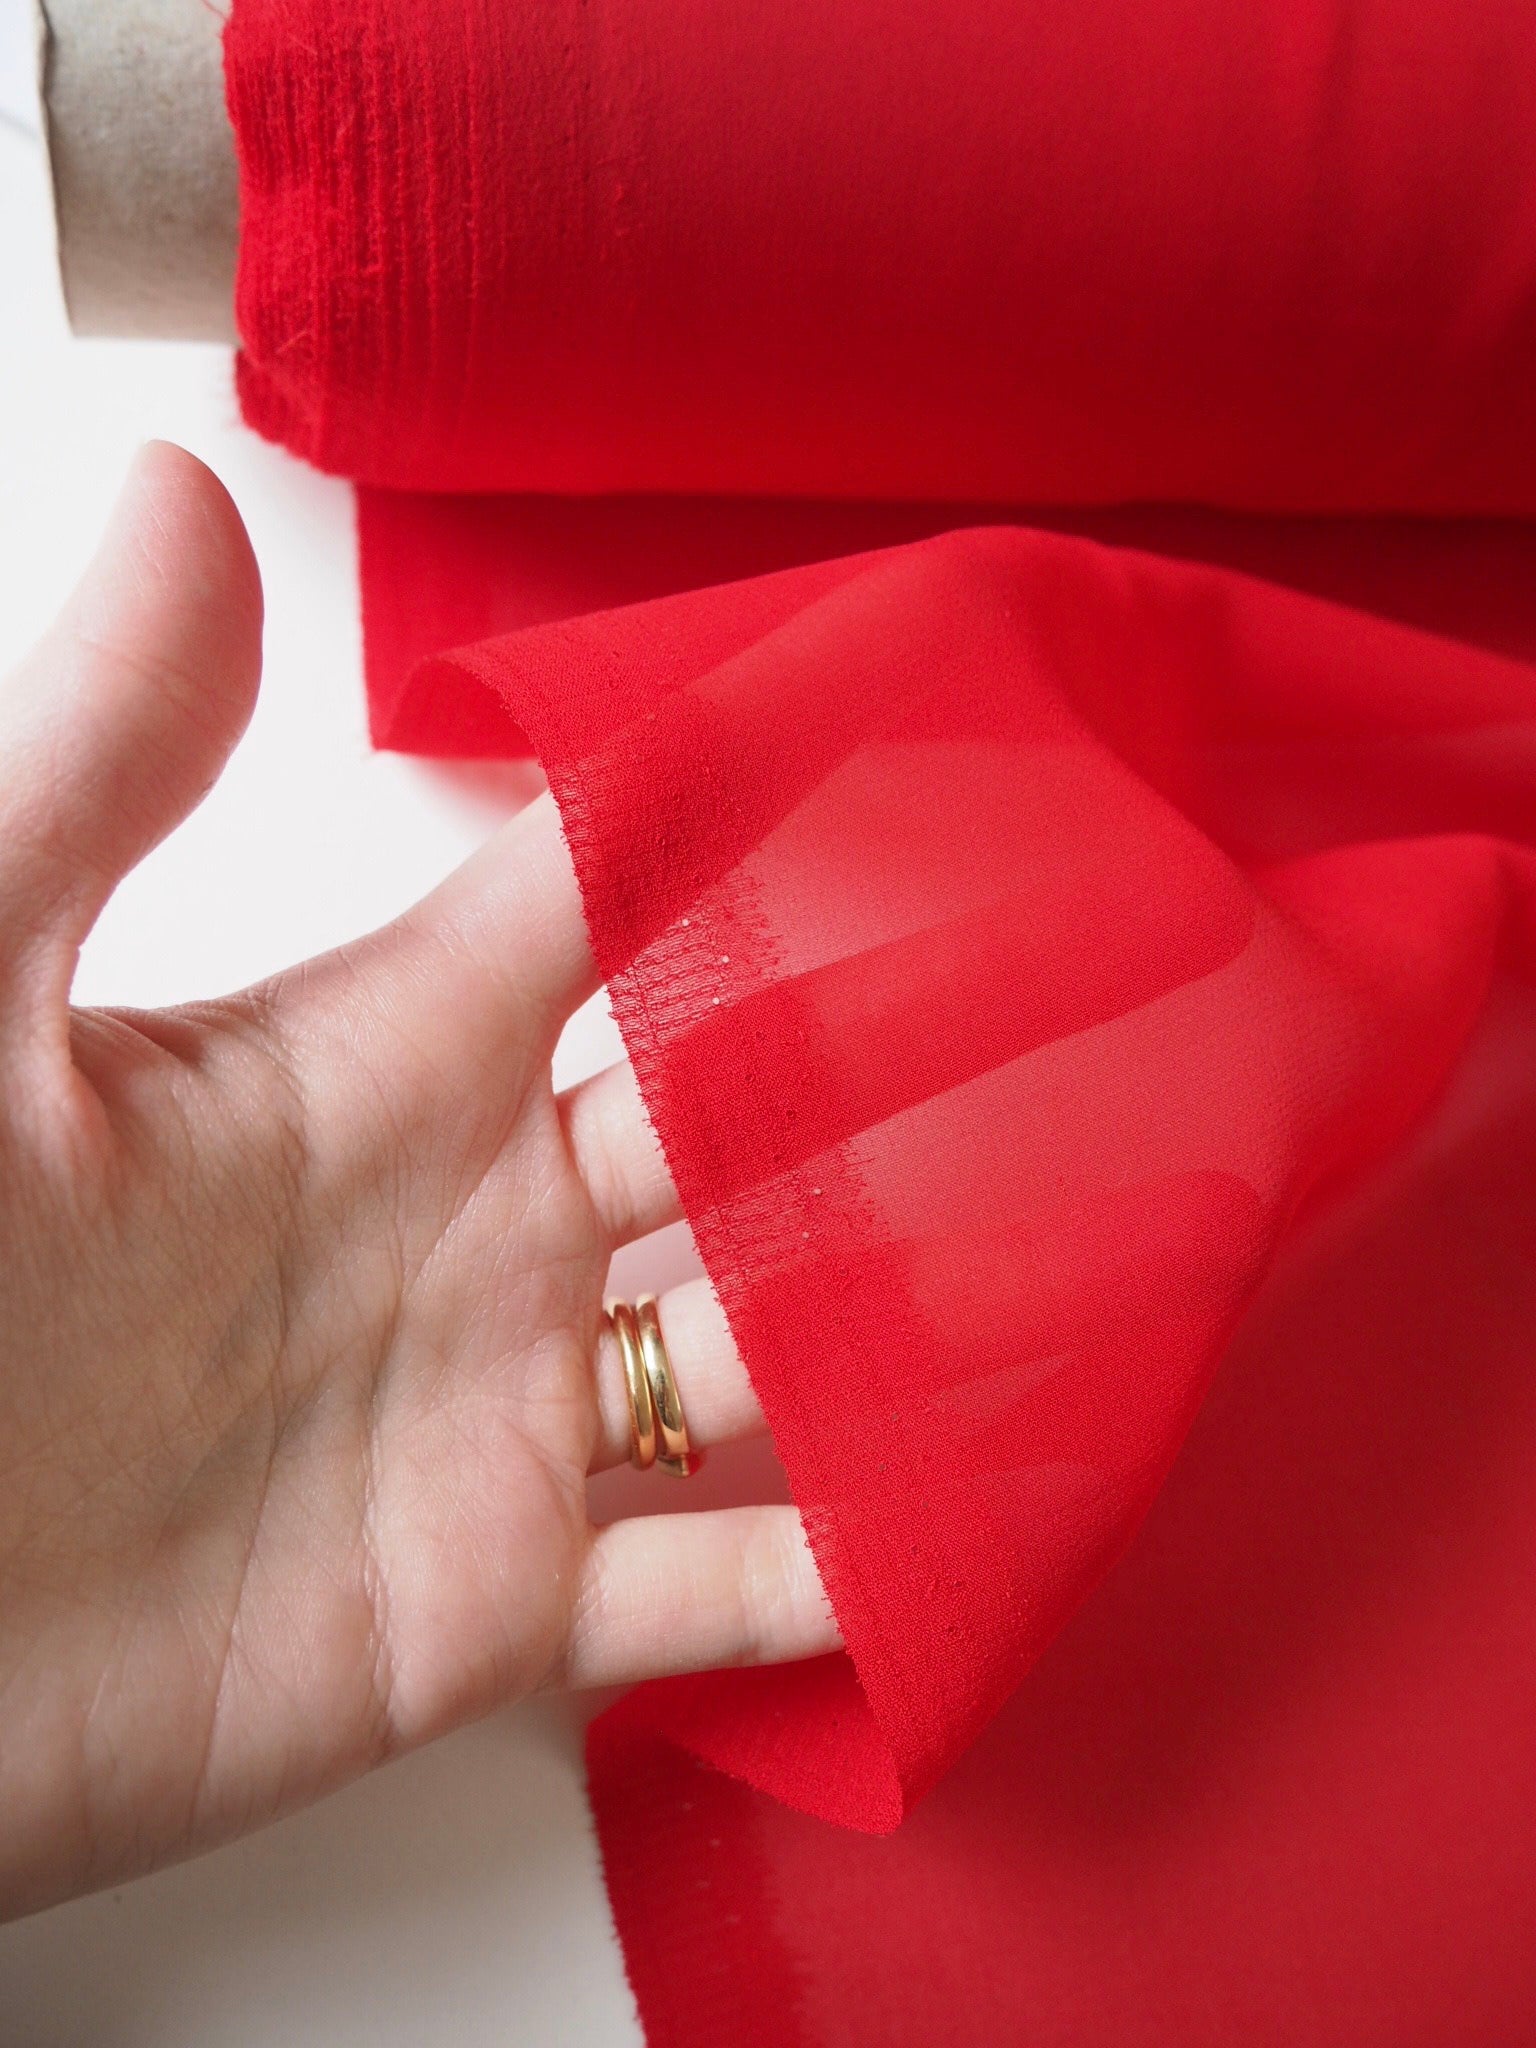 Tomato Red Sequin & Beads on Silk Chiffon JEC-009-6 Fabric